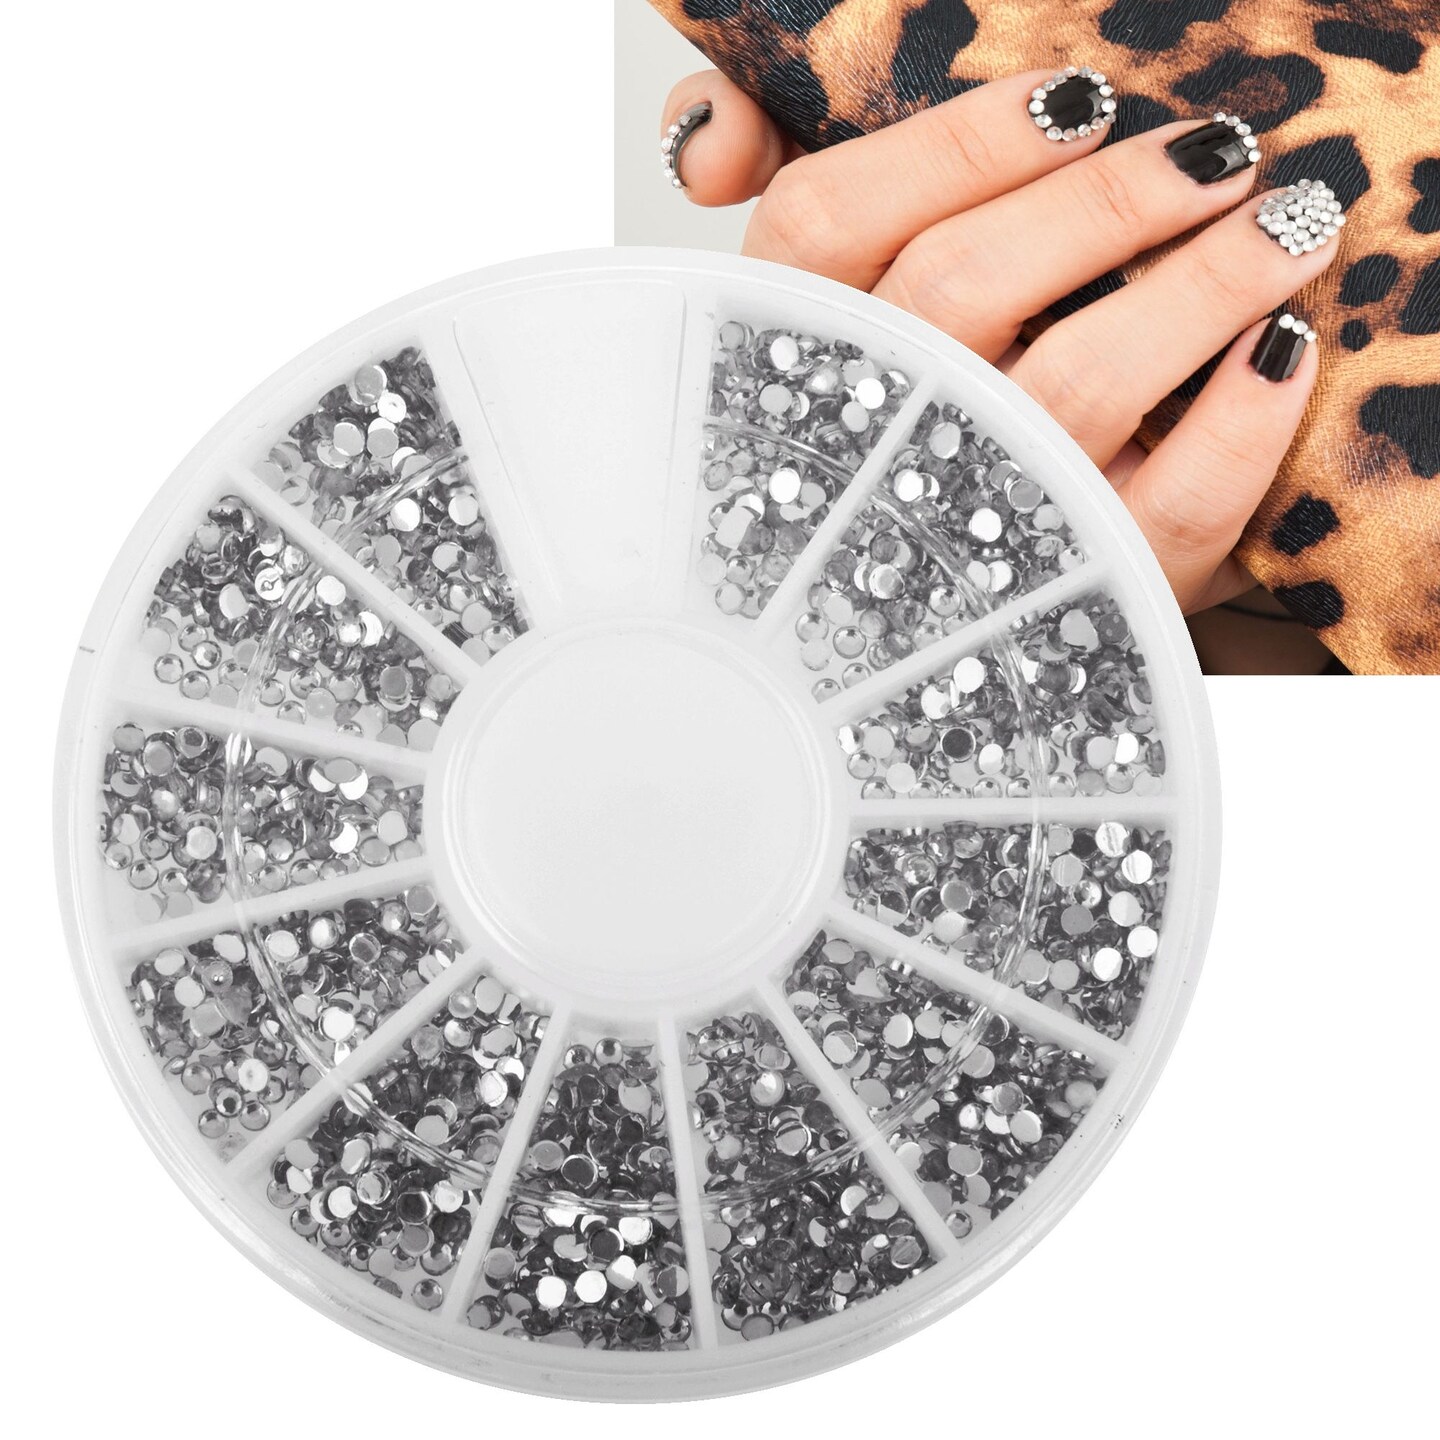 Zodaca Nail Art Tips 1.5mm 3D Crystal Giltter Bling Rhinestones Decoration Manicure Beauty 1200pcs